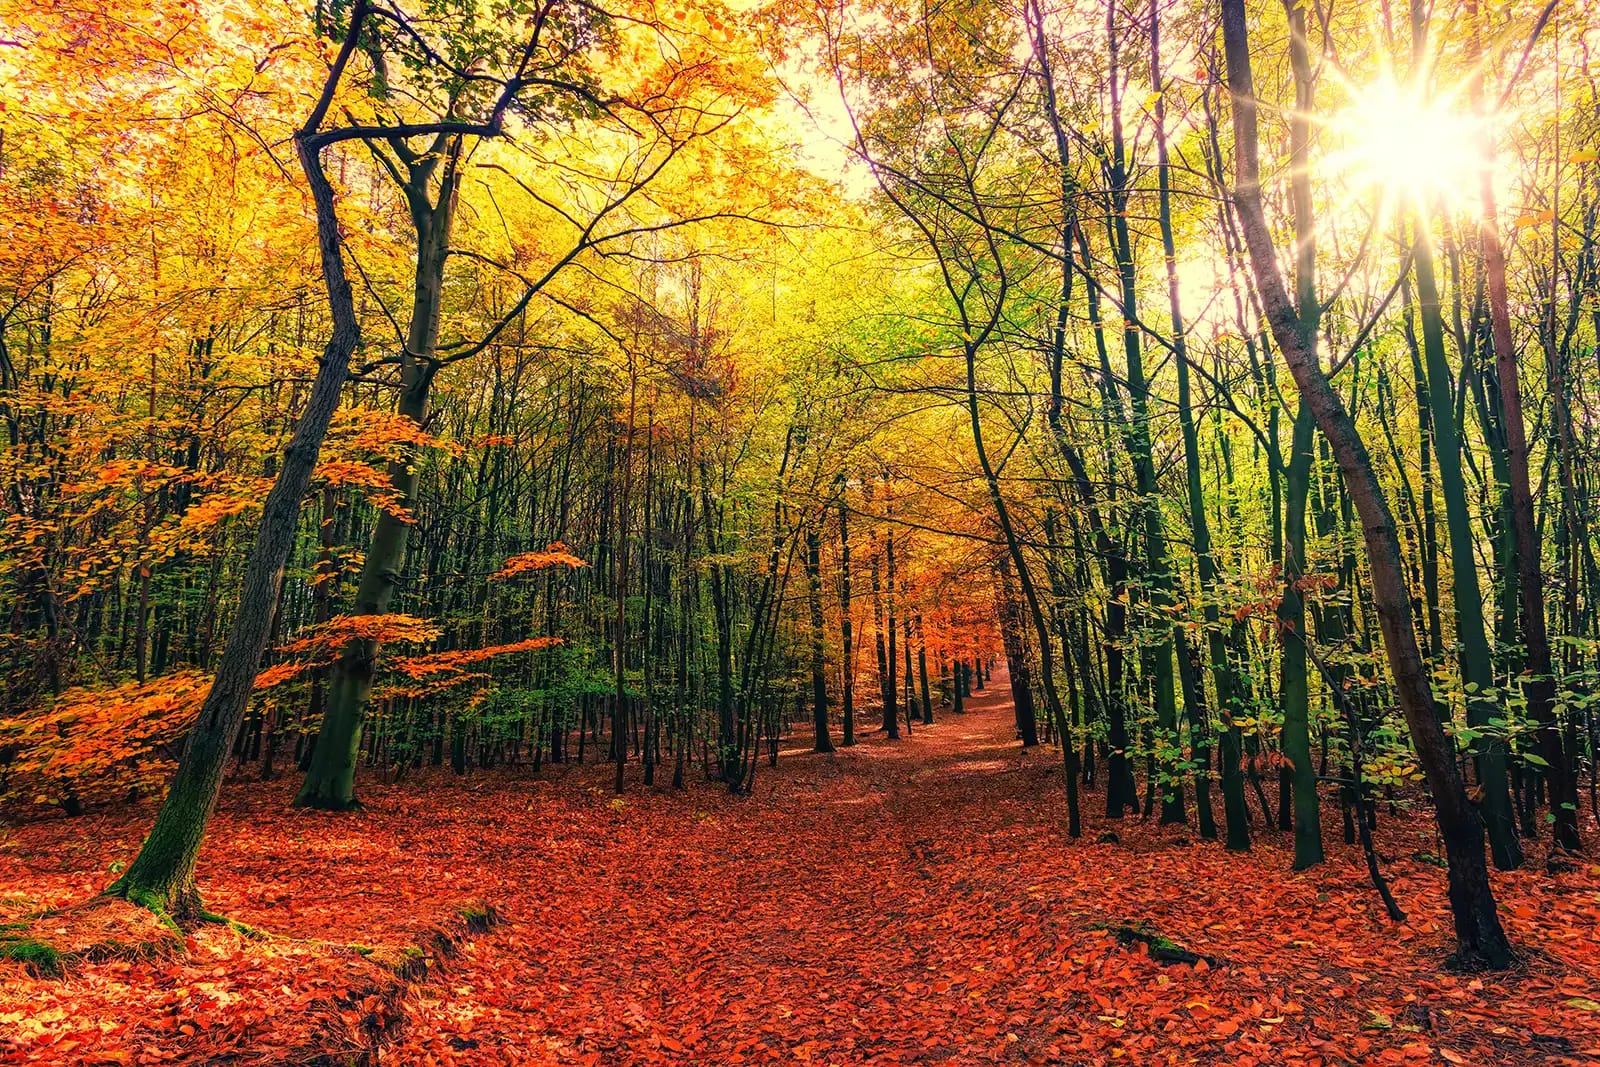 autumn forest with leaf-strewn path